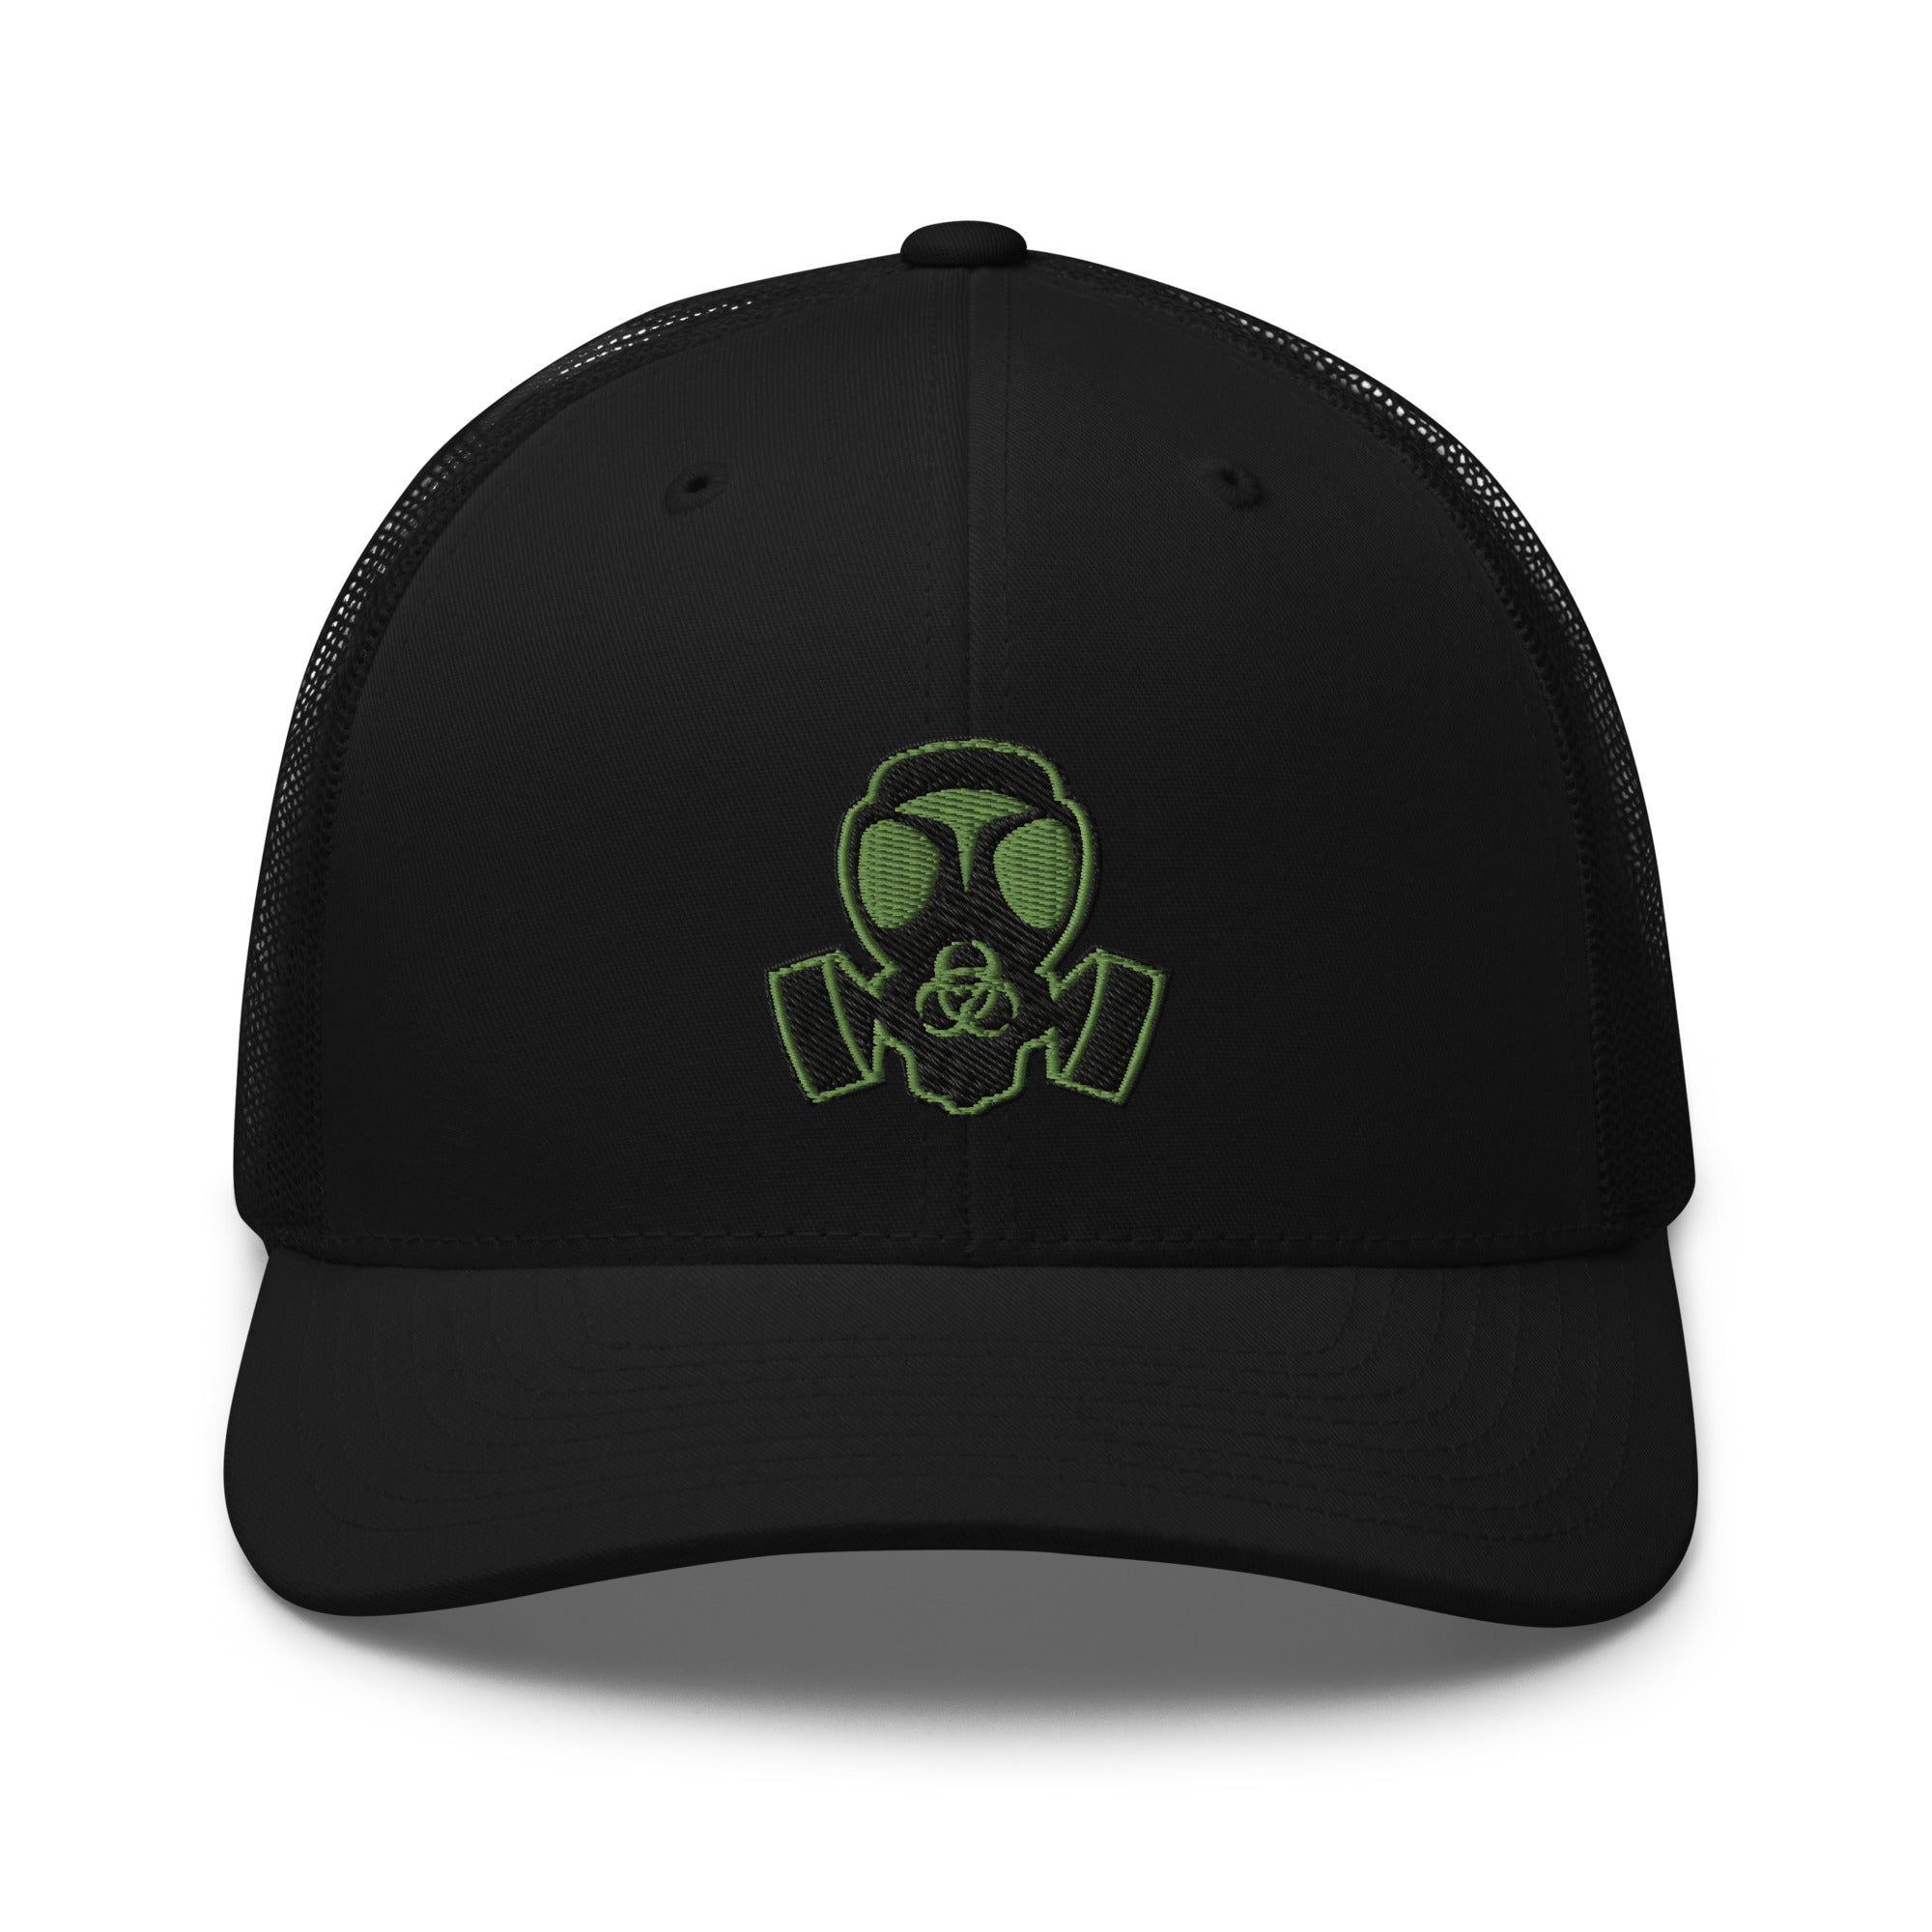 Green Bio Hazard Gas Mask Embroidered Retro Trucker Cap Snapback Hat